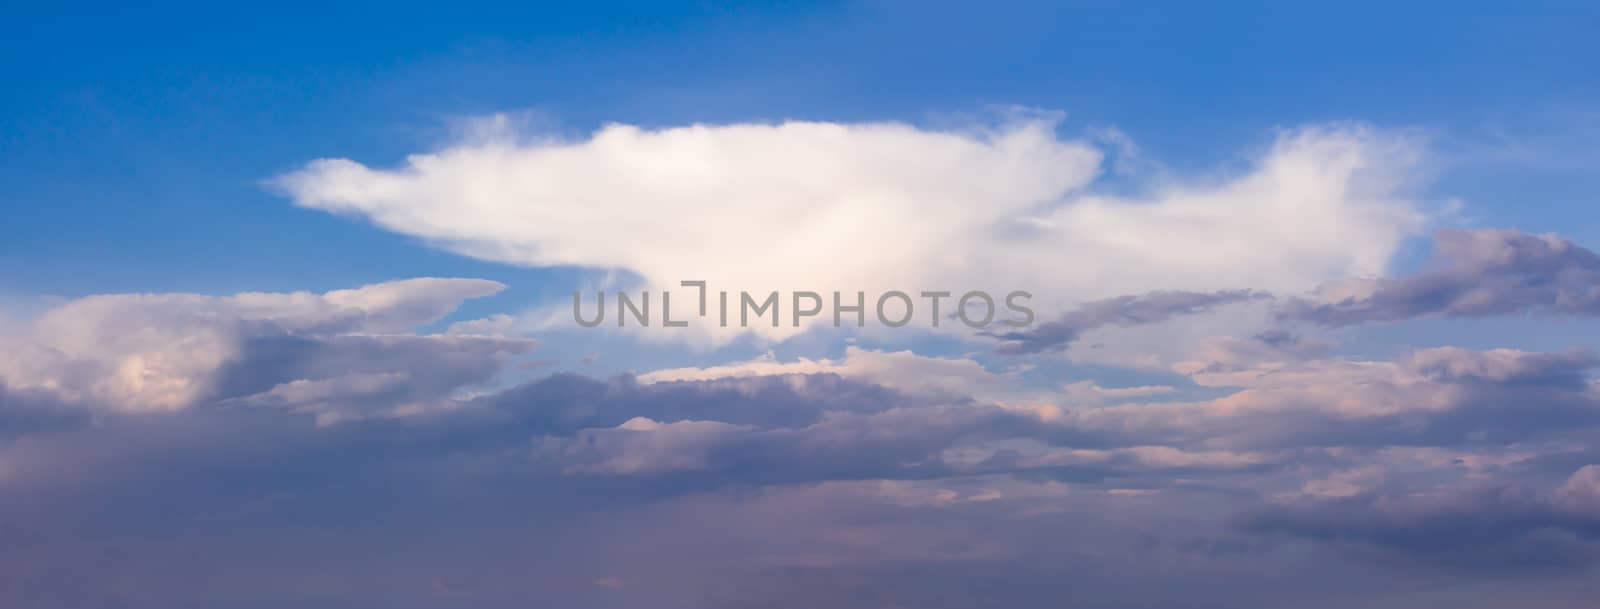 Panorama White clouds close up in blue sky before rain